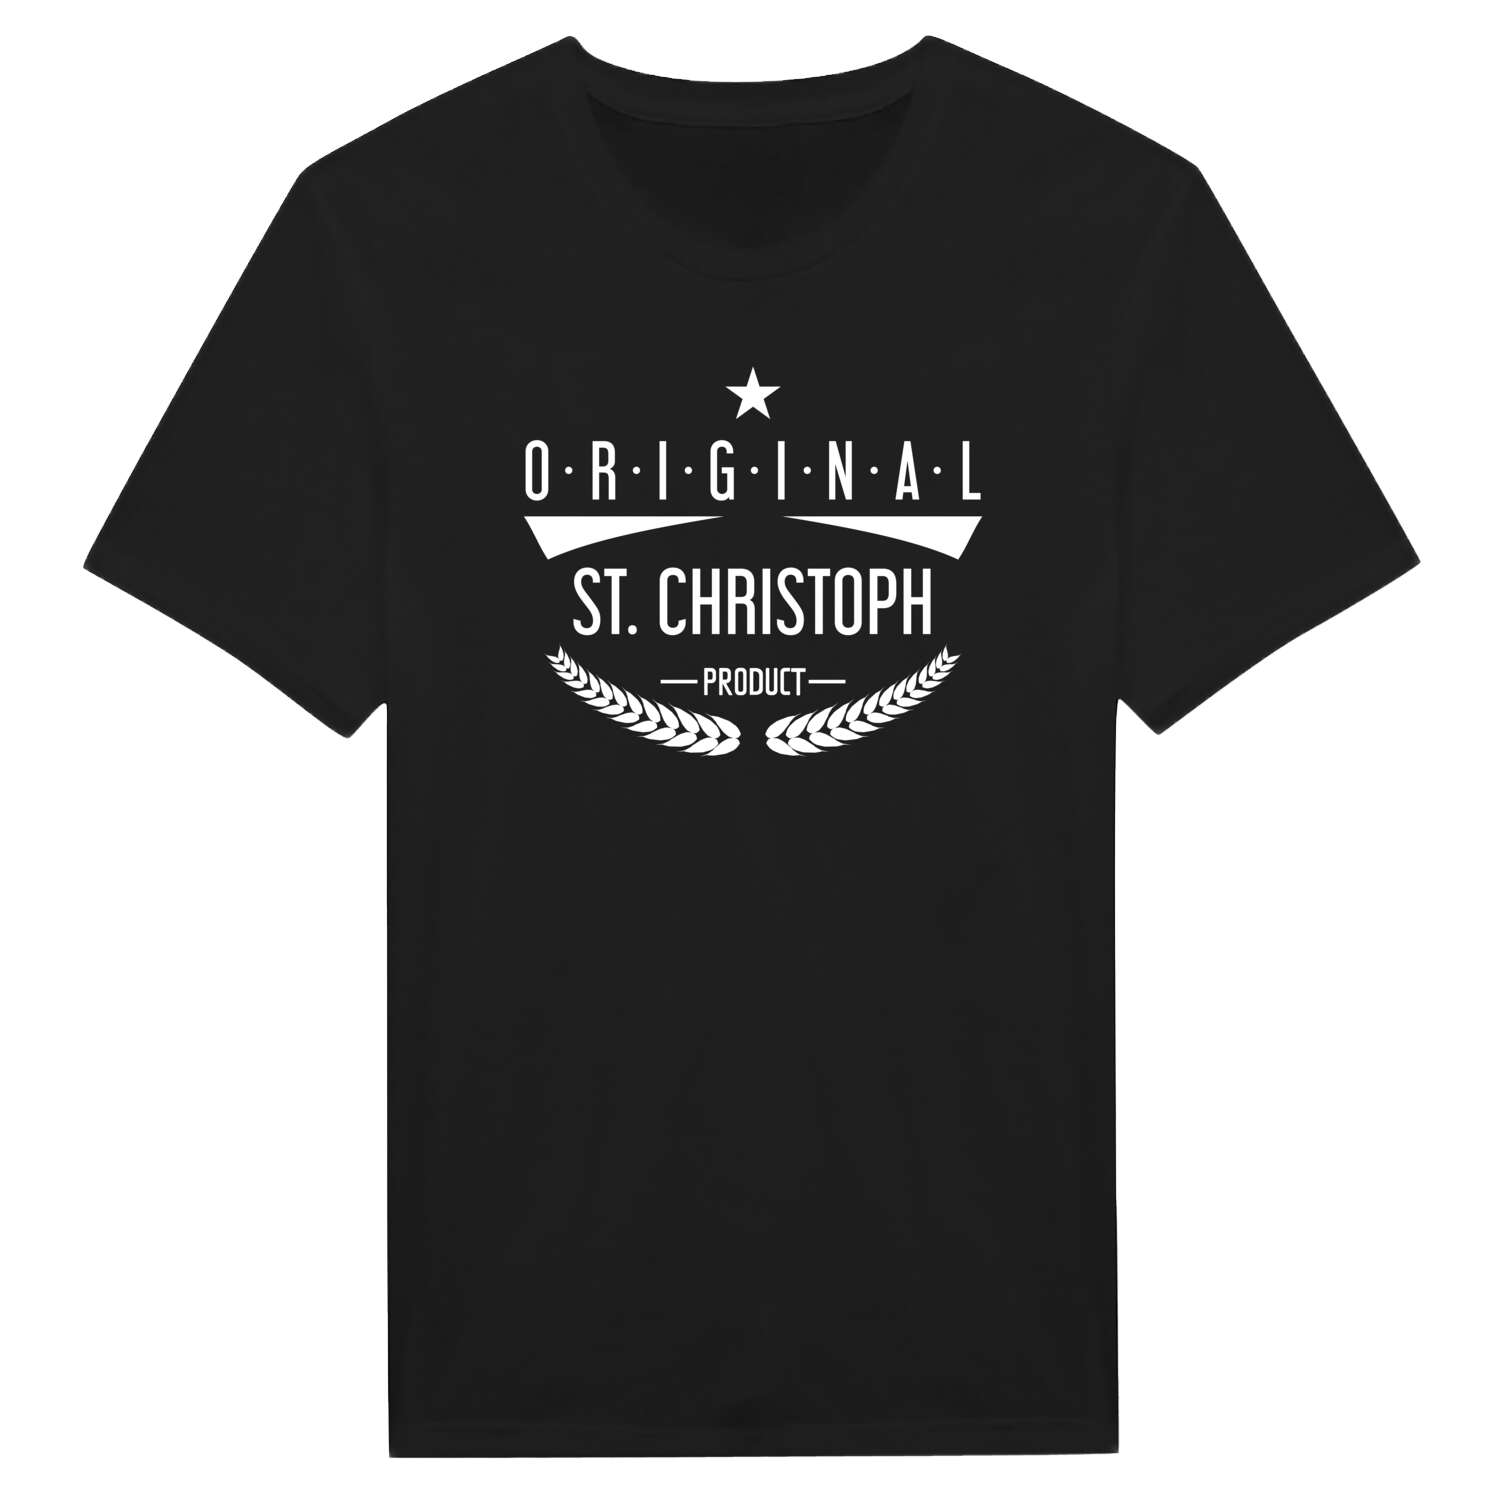 St. Christoph T-Shirt »Original Product«